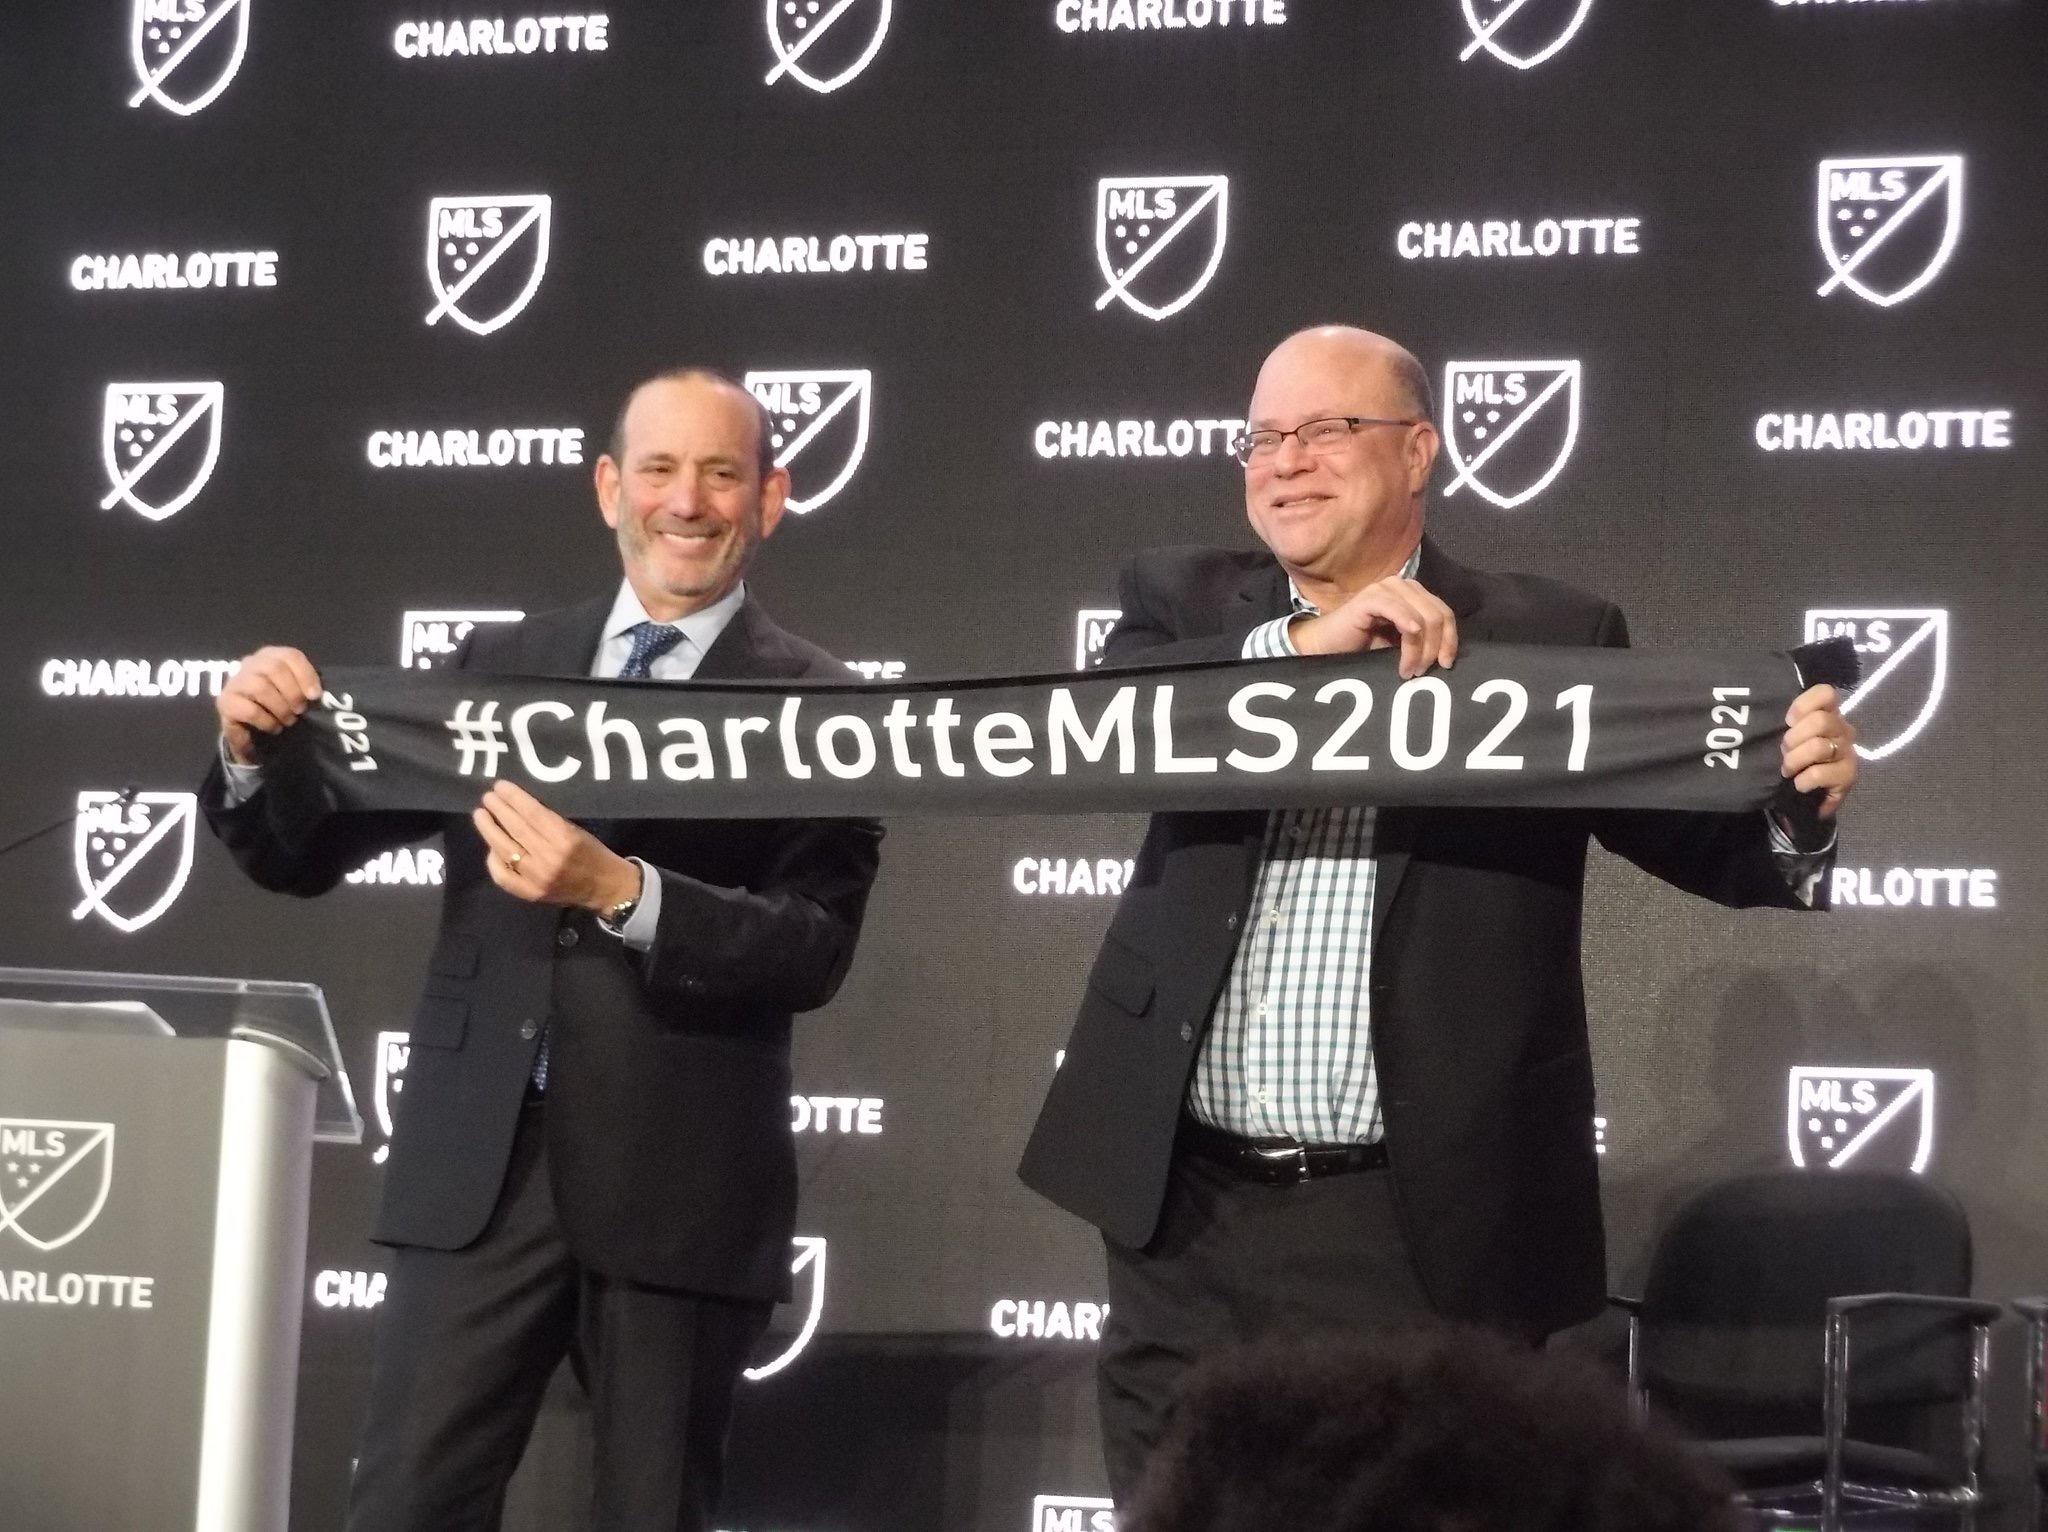 Charlotte awarded 30th MLS franchise